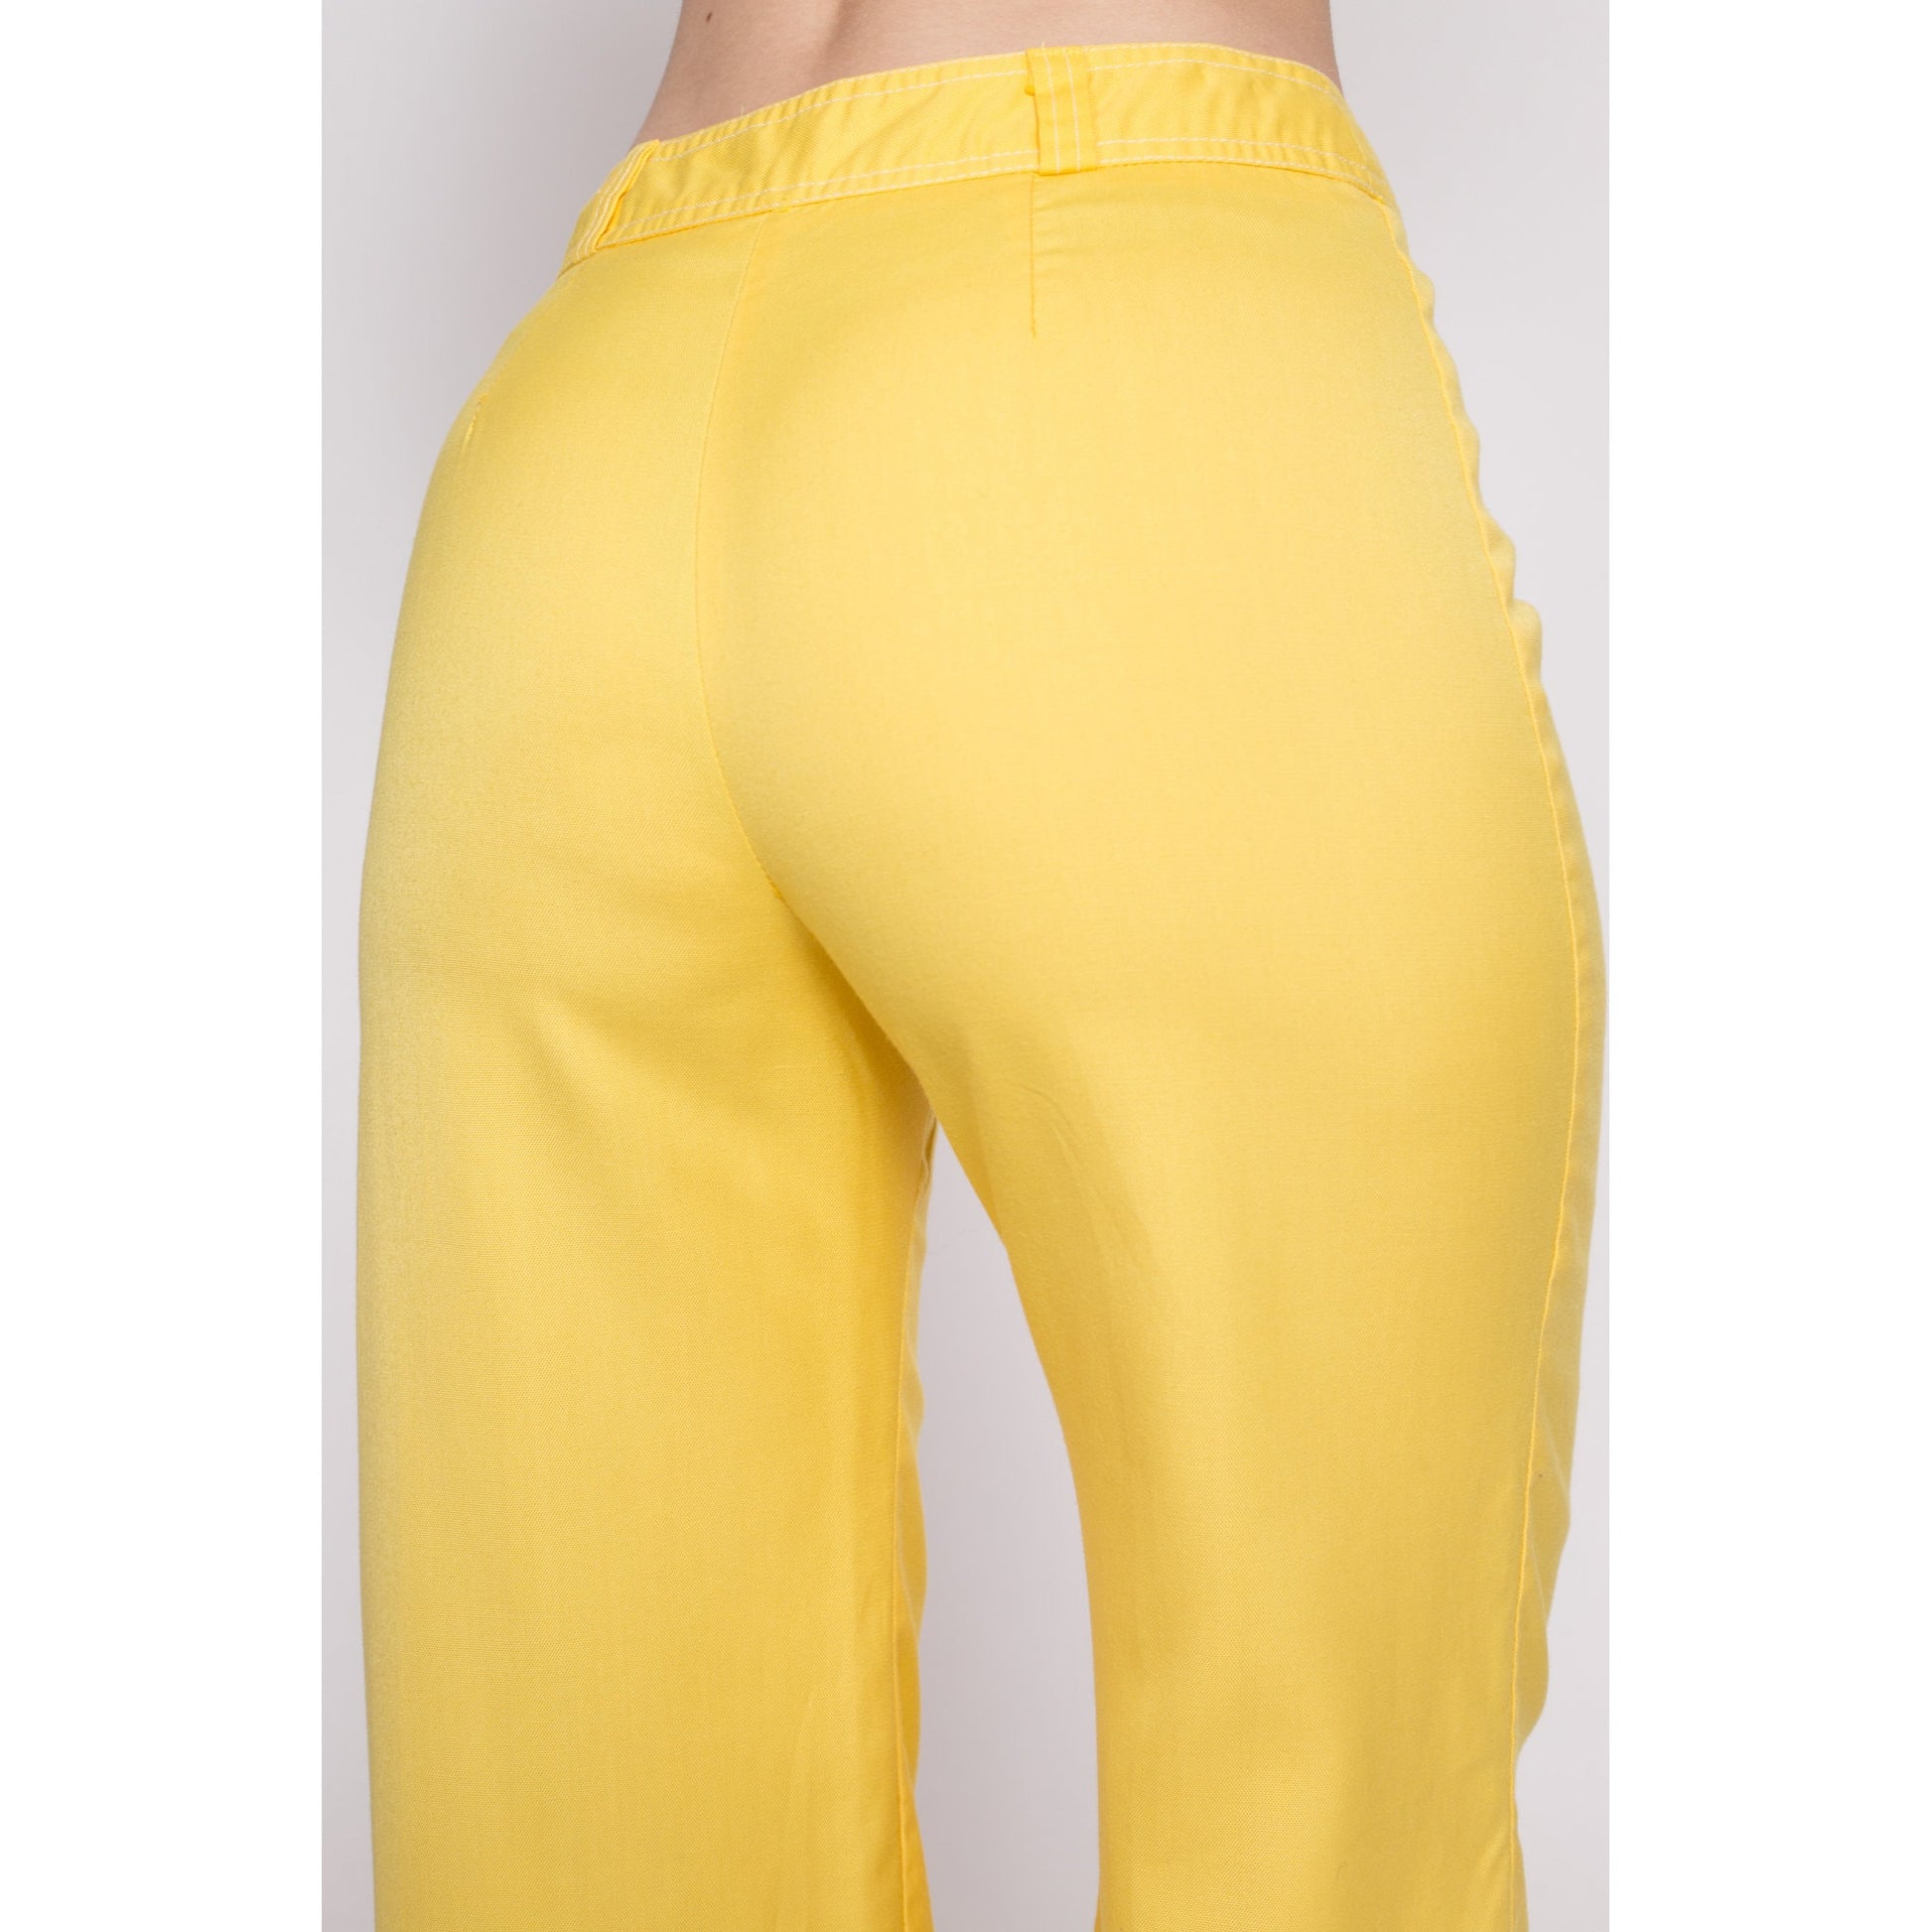 Yellow Pants for Women